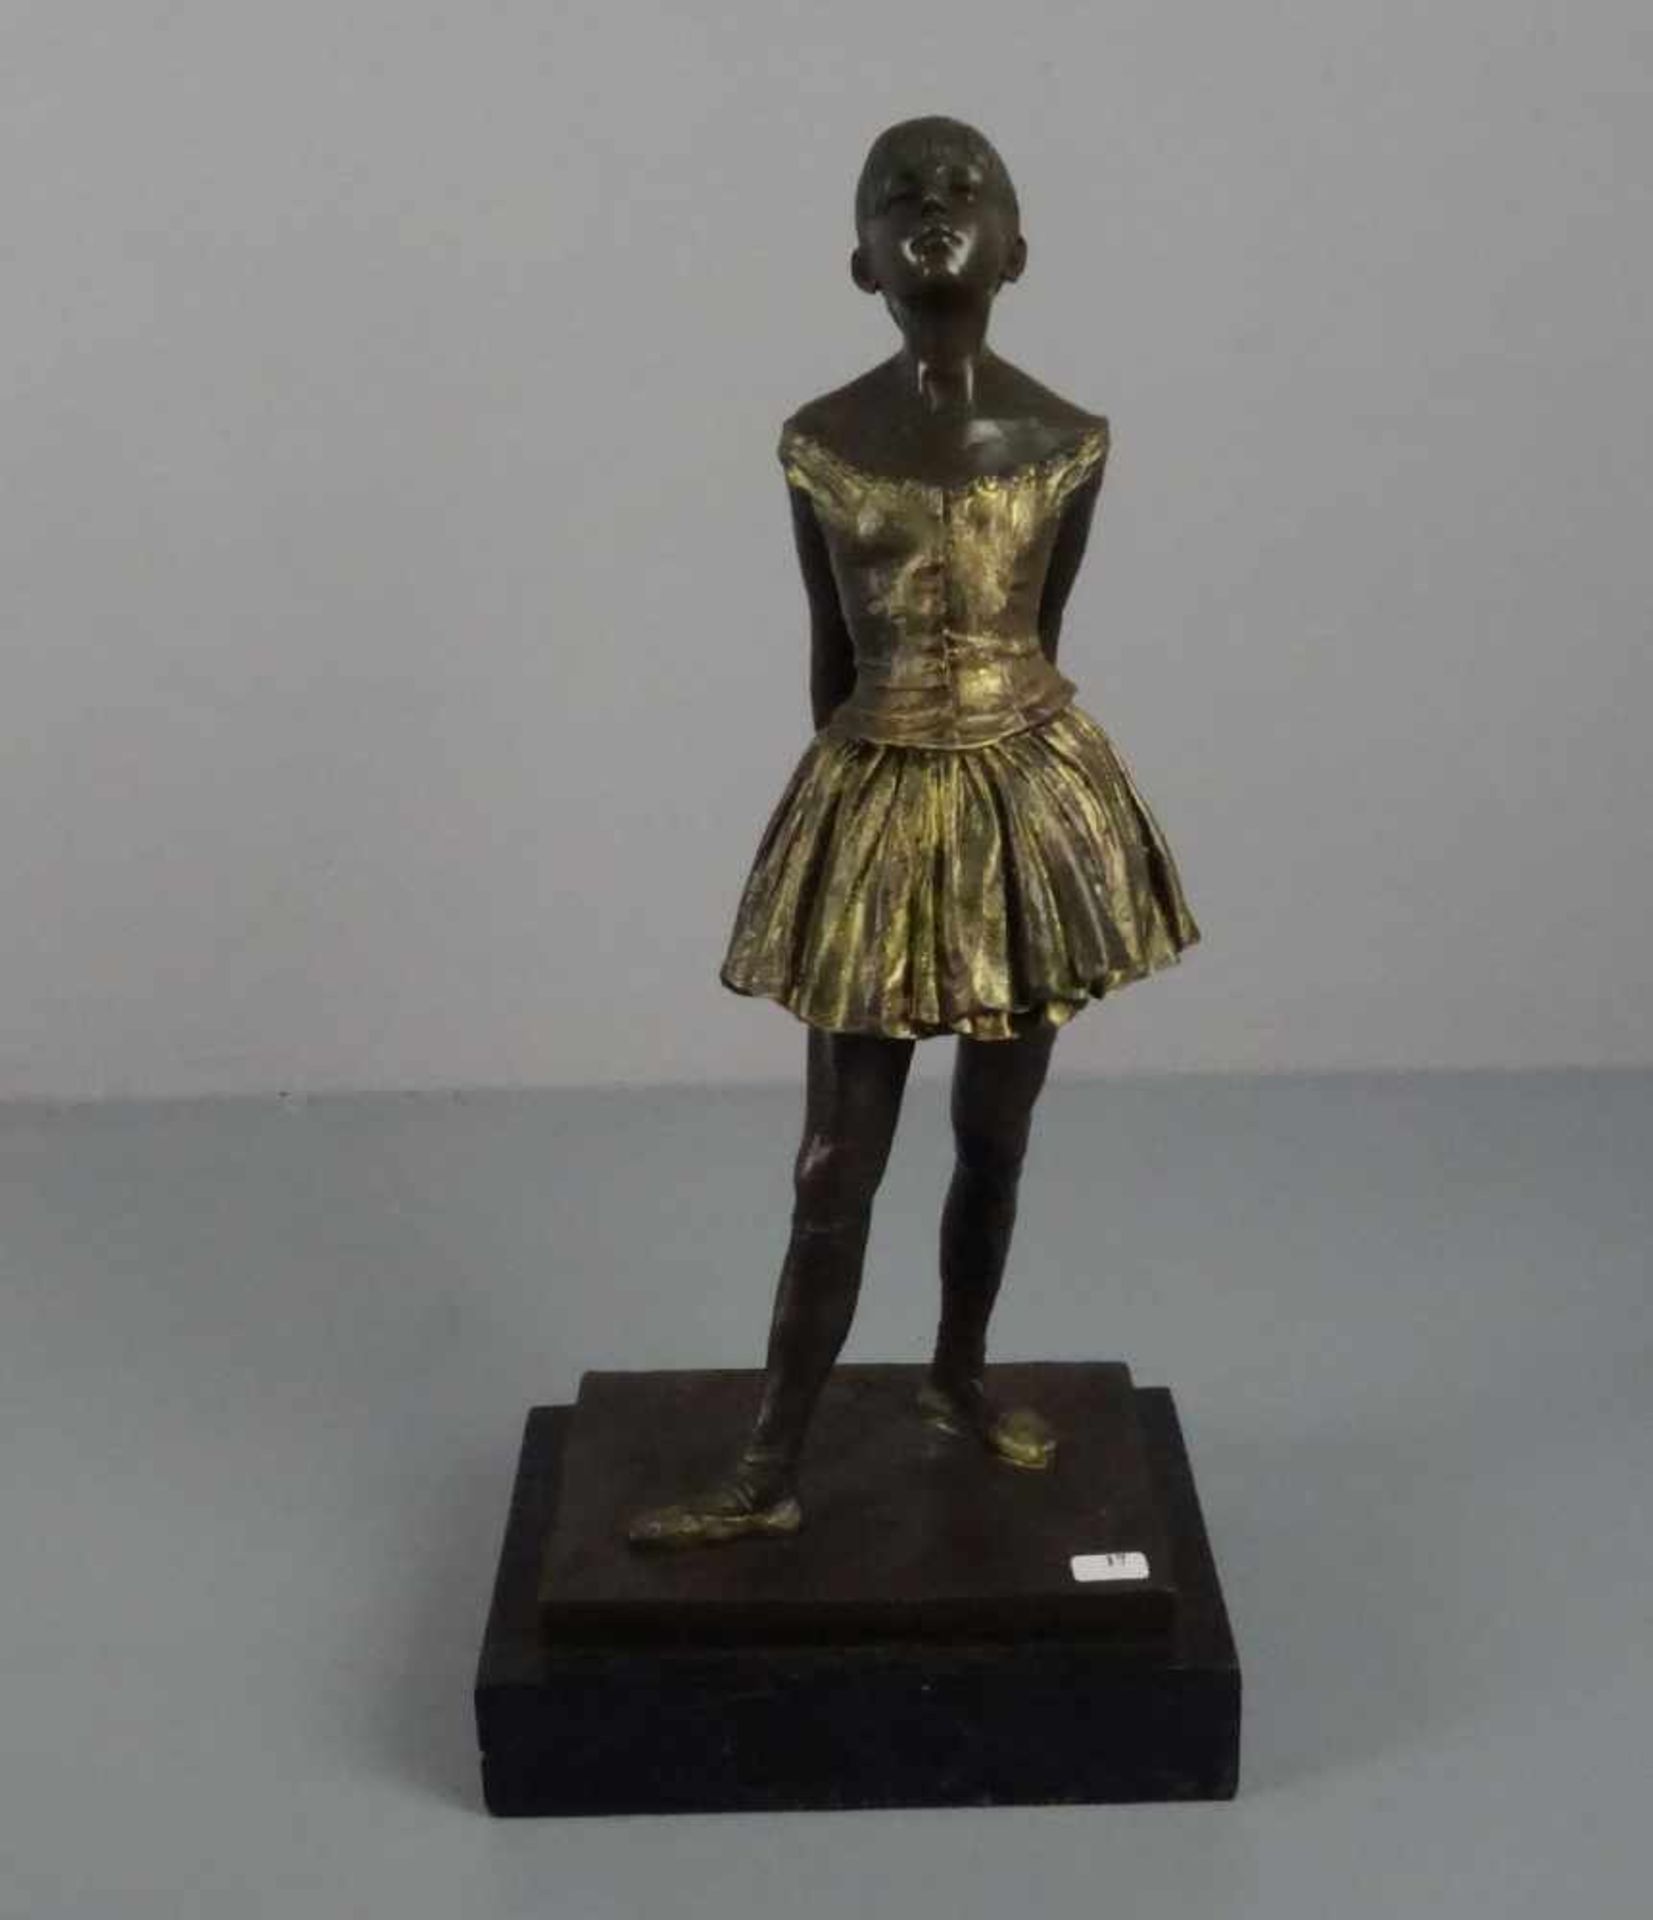 DEGAS, EDGAR (1834-1917), Skulptur / sculpture: "Petite danseuse de quatorze ans" (Originaltitel; "